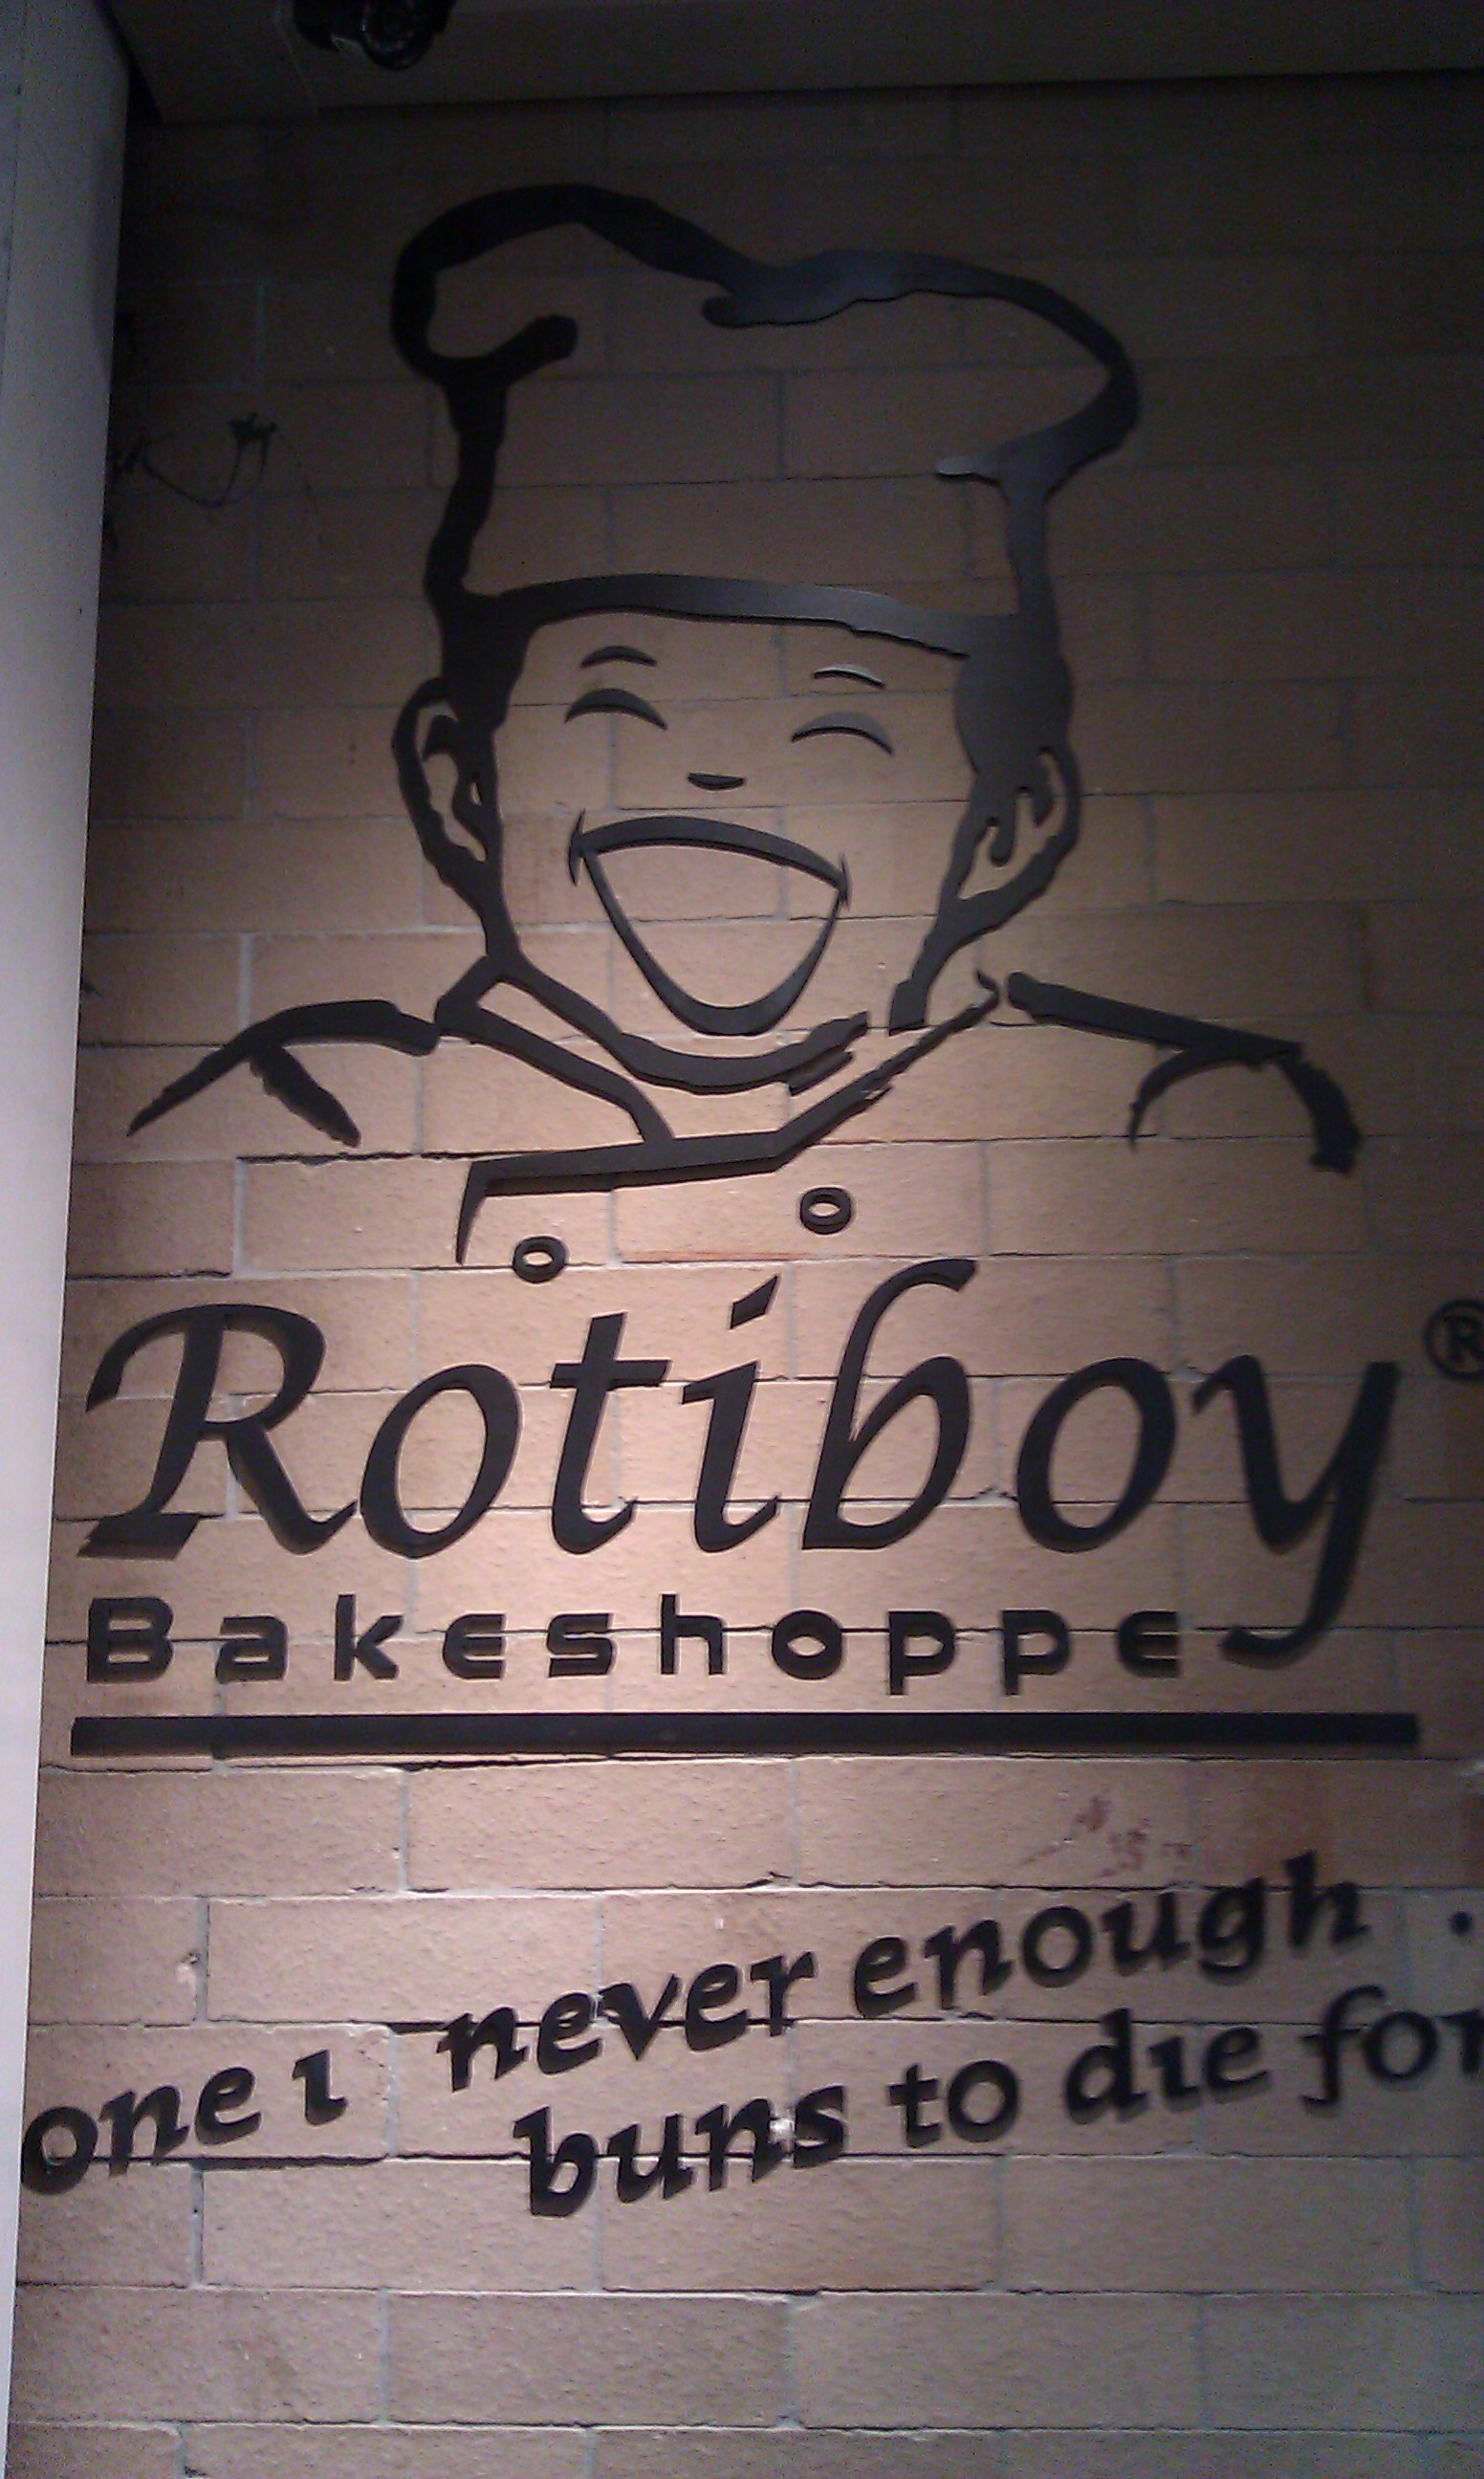 Rotiboy bakery! Made me smile. :)